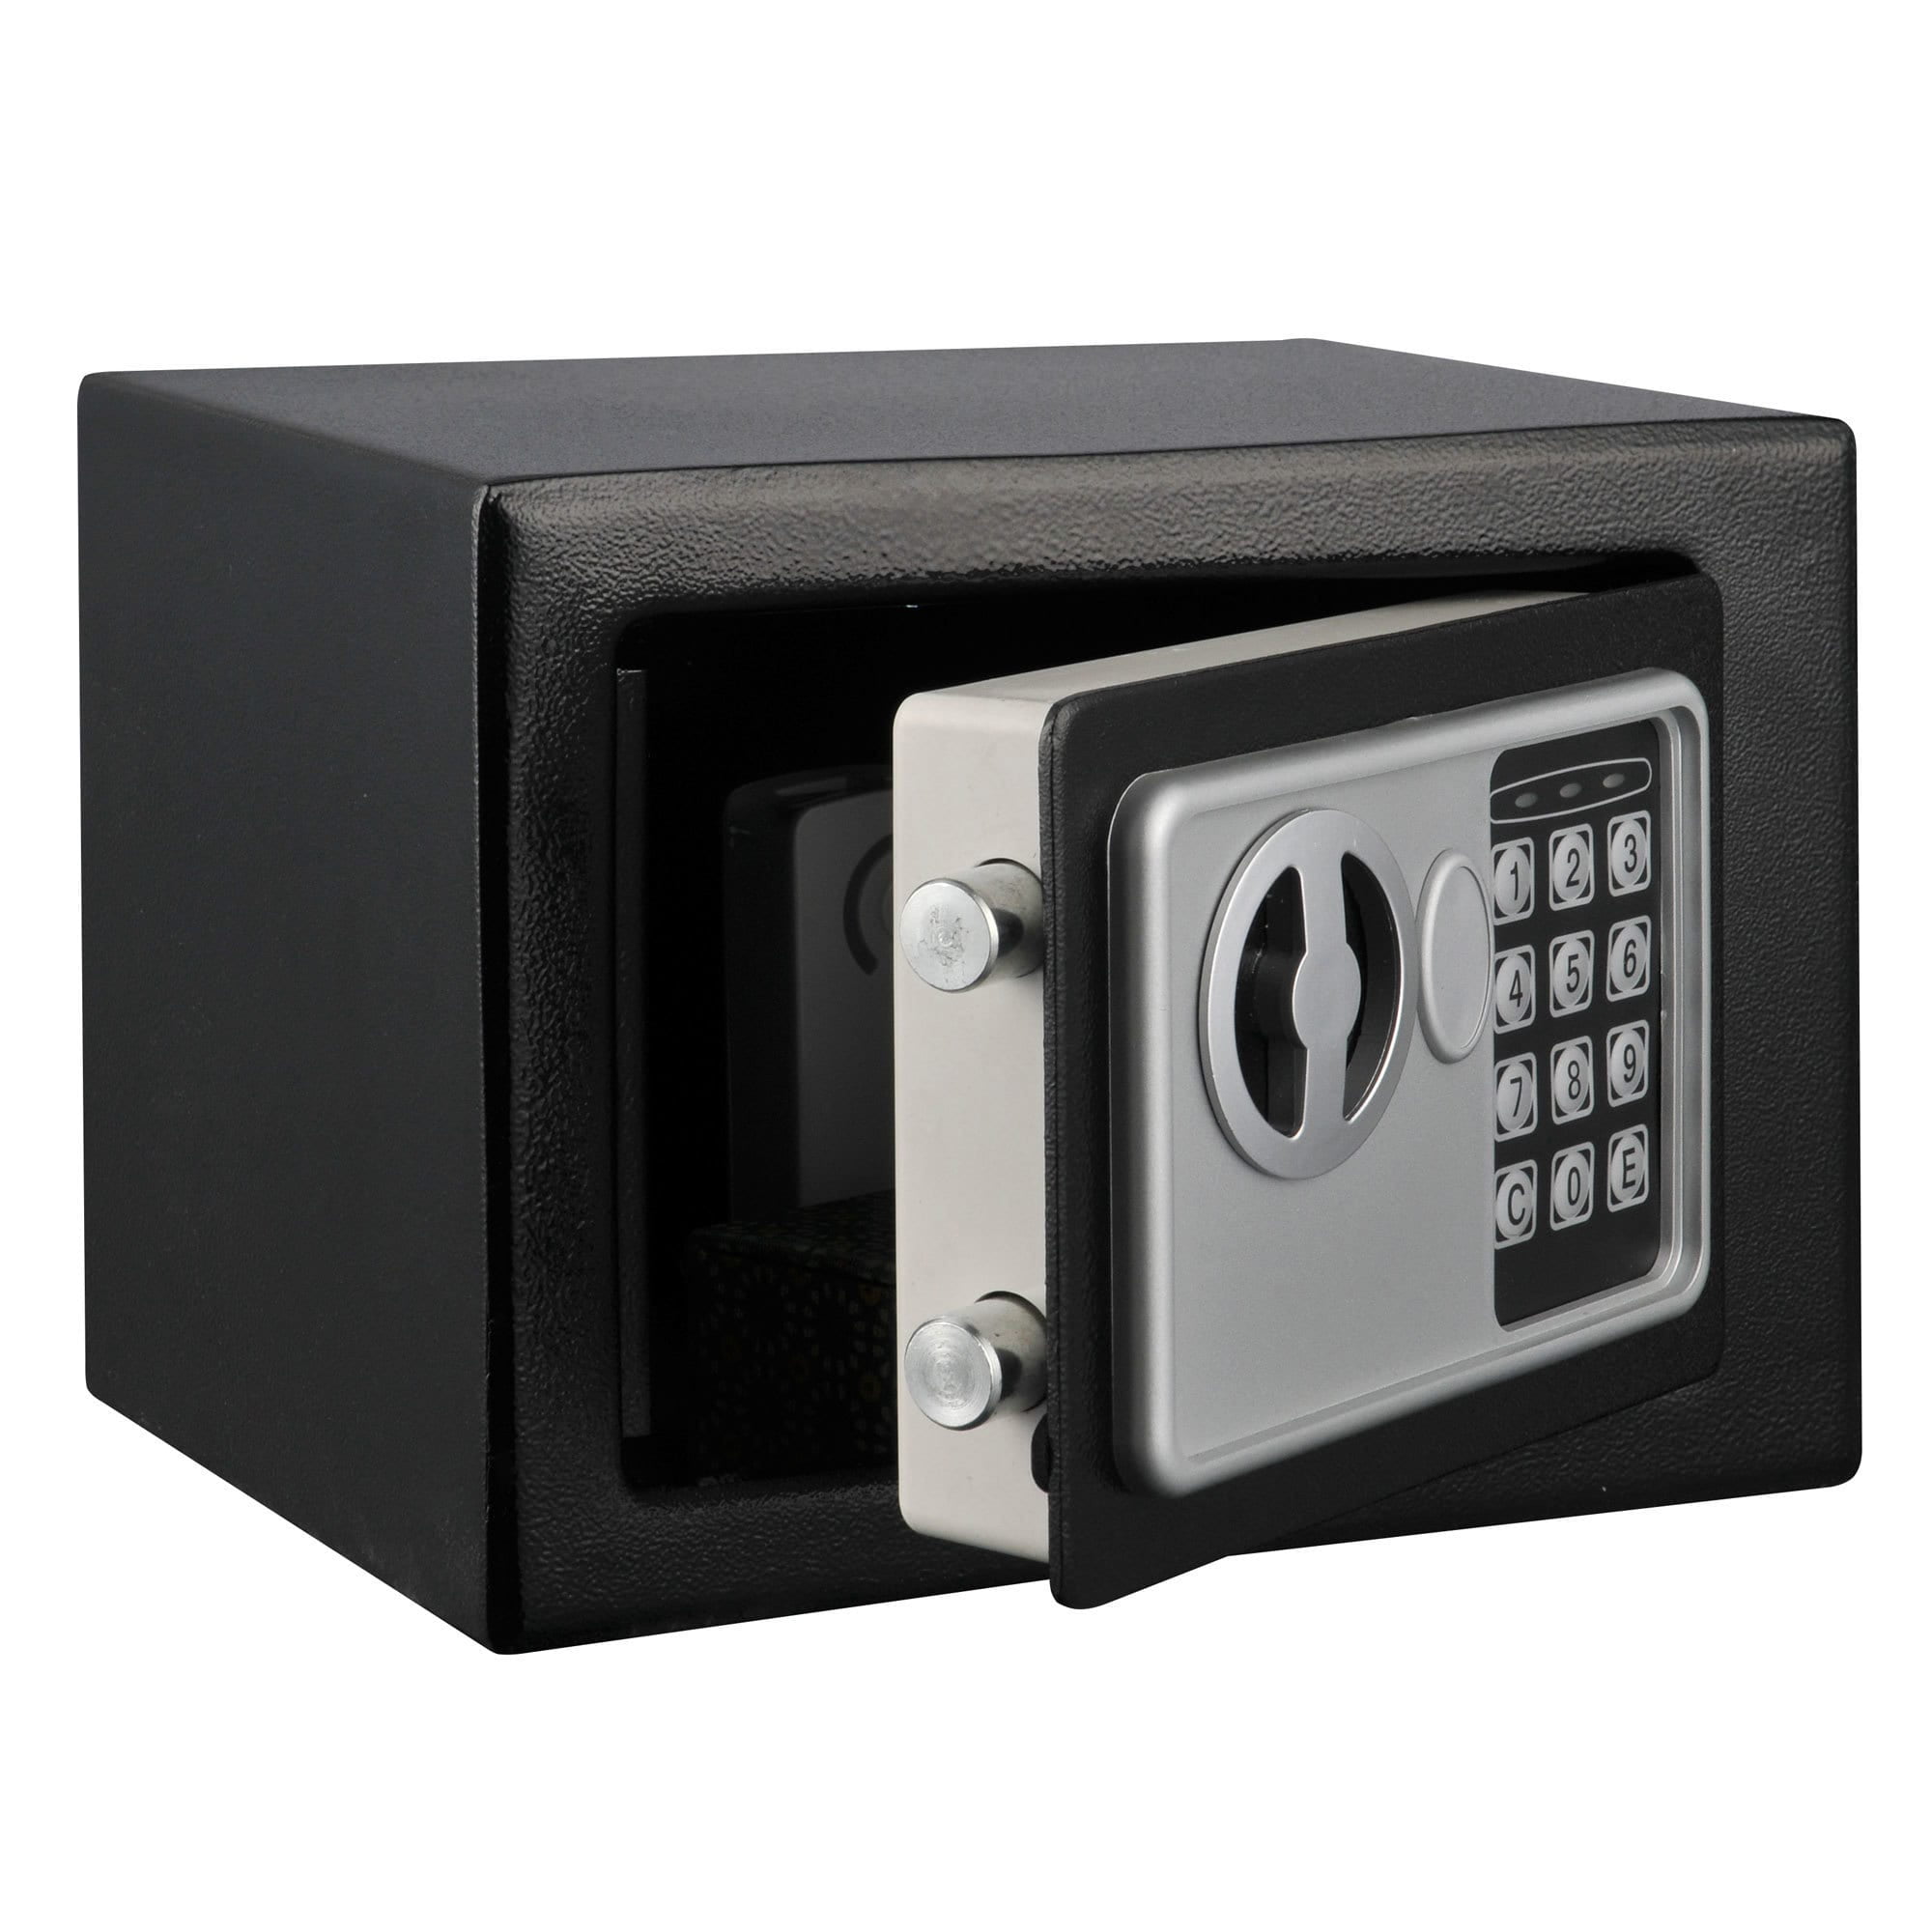 Digital Home Jewelry Cash Security Safe Box Waterproof Electronic Steel Black|# 